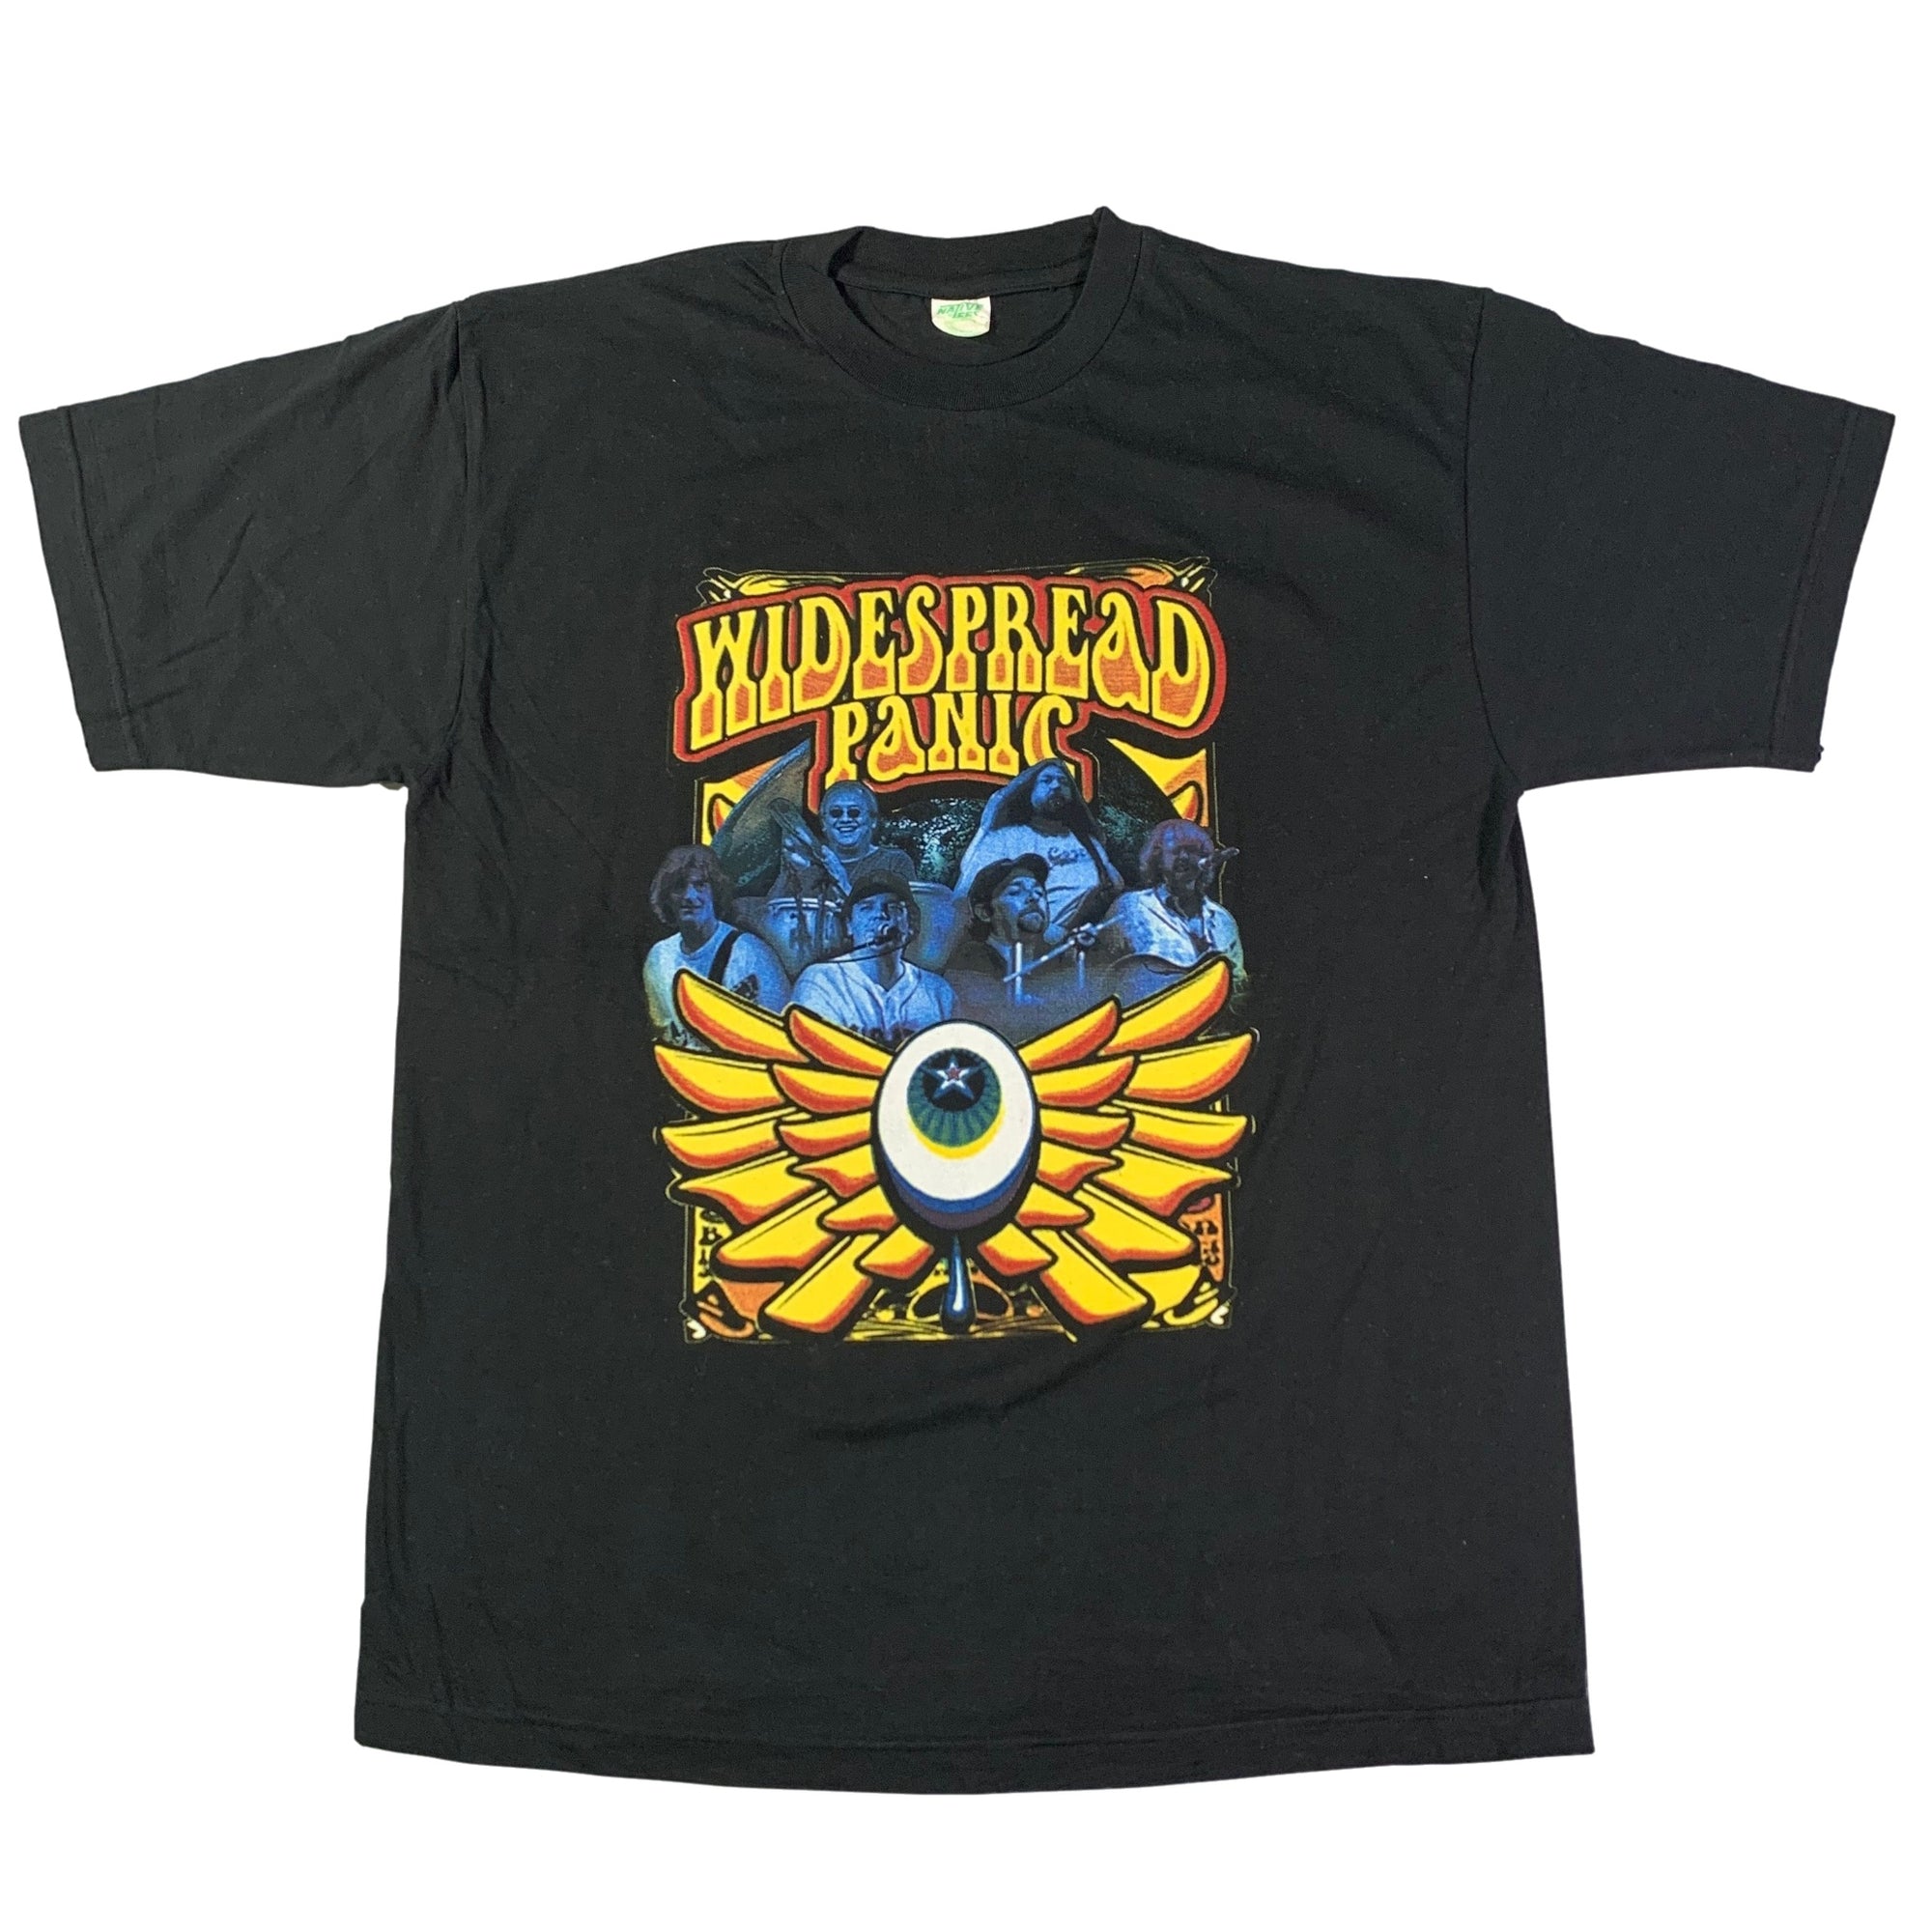 Vintage Widespread Panic "WP" T-Shirt - jointcustodydc